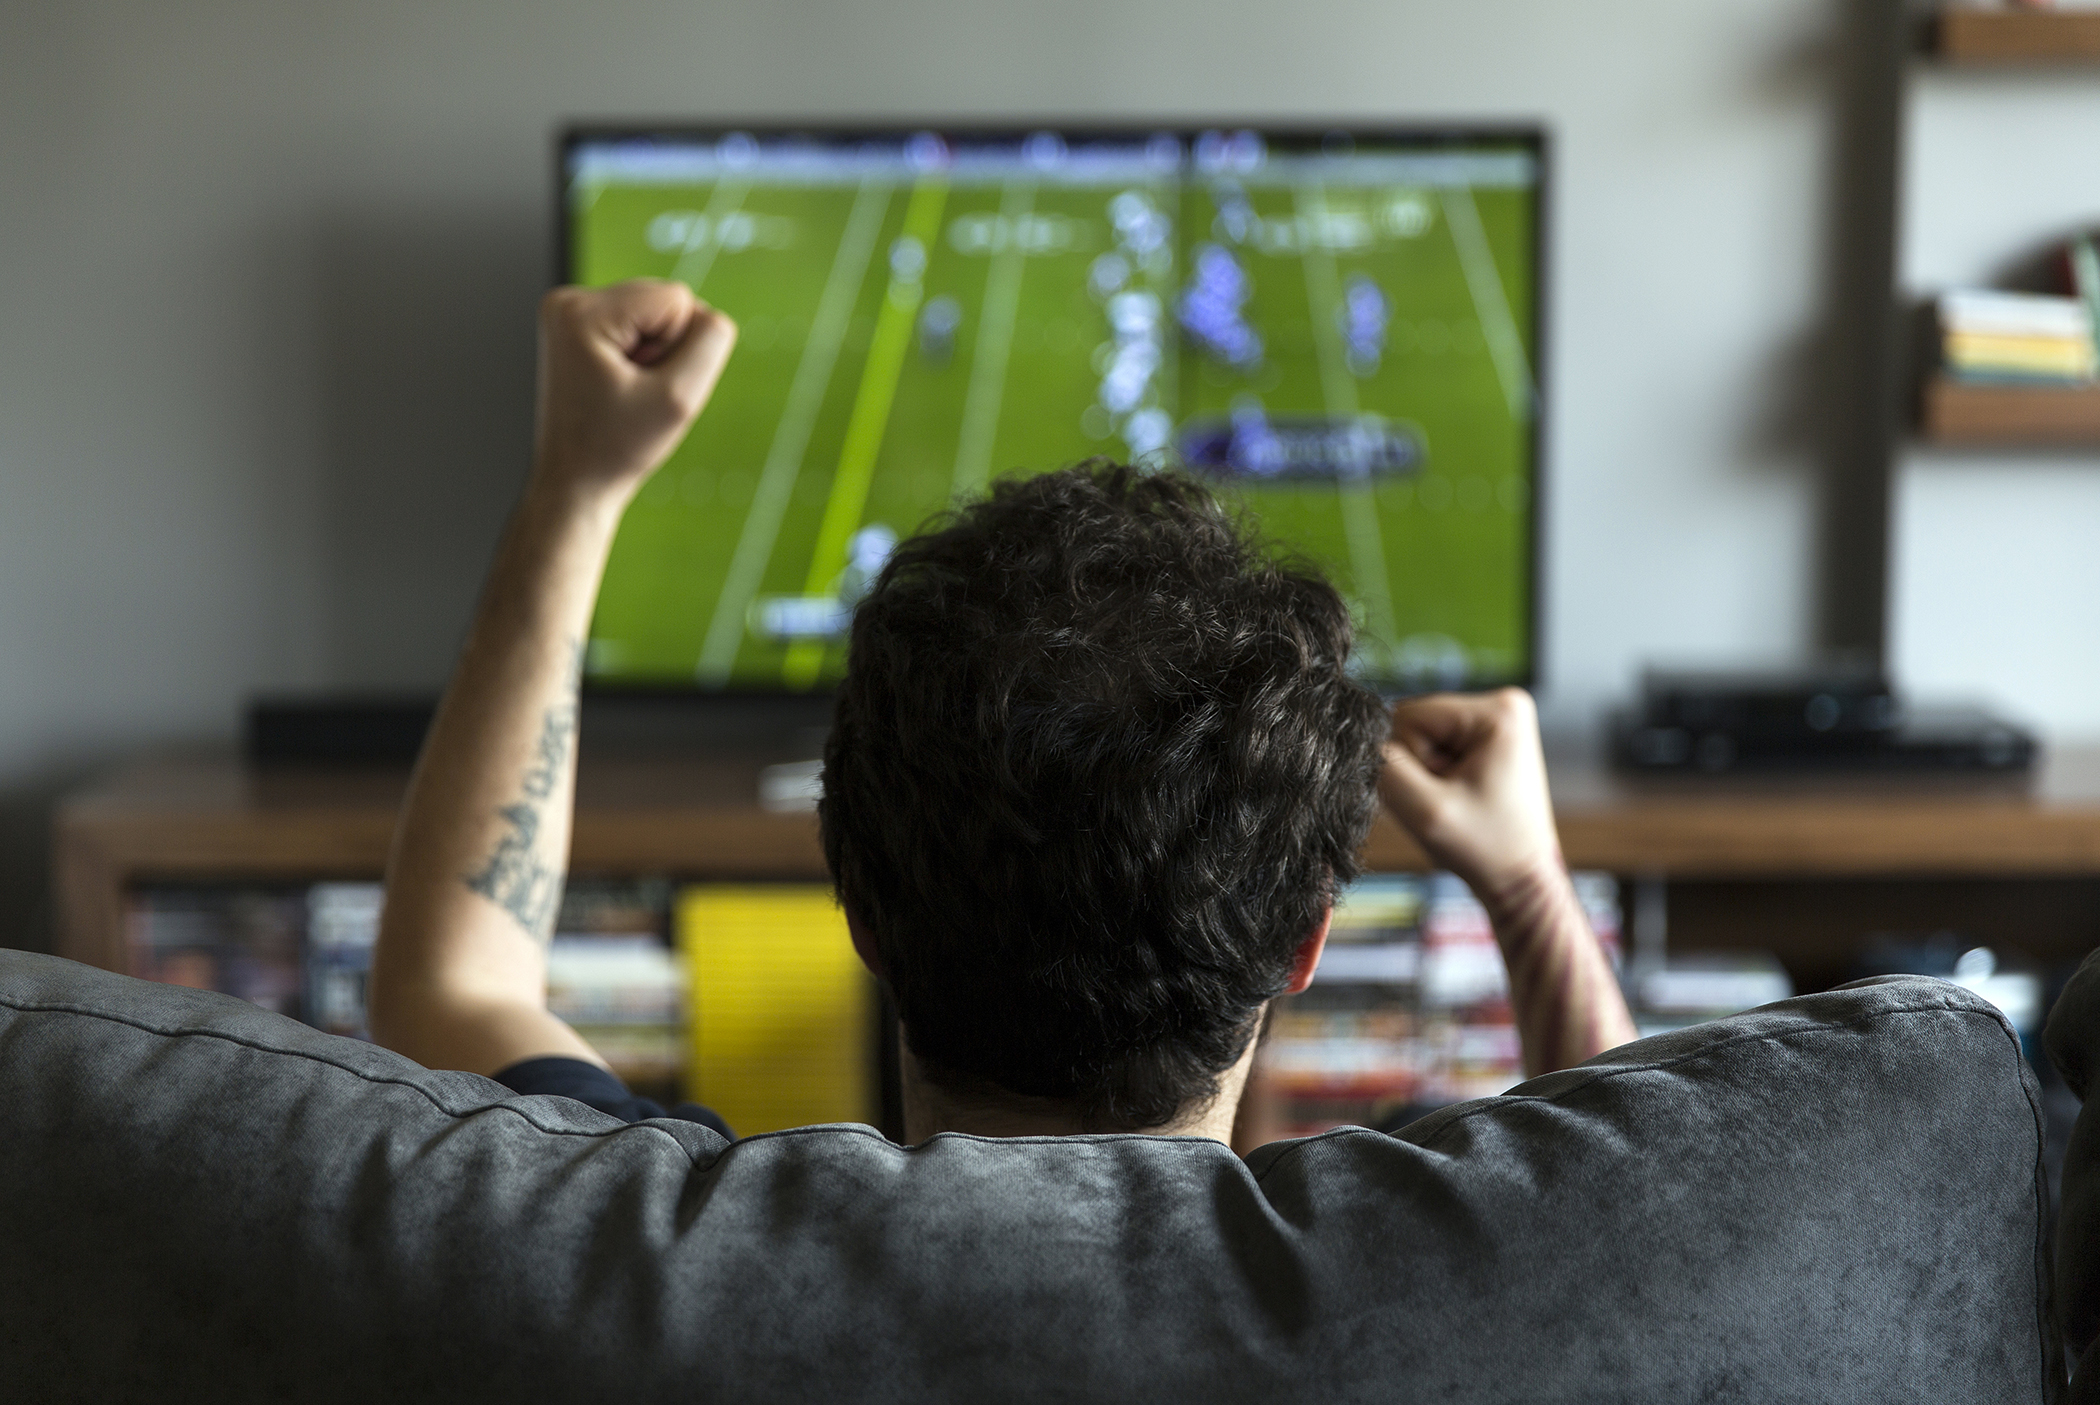 NFL Playoffs: How To Watch NFL Playoff Games Online